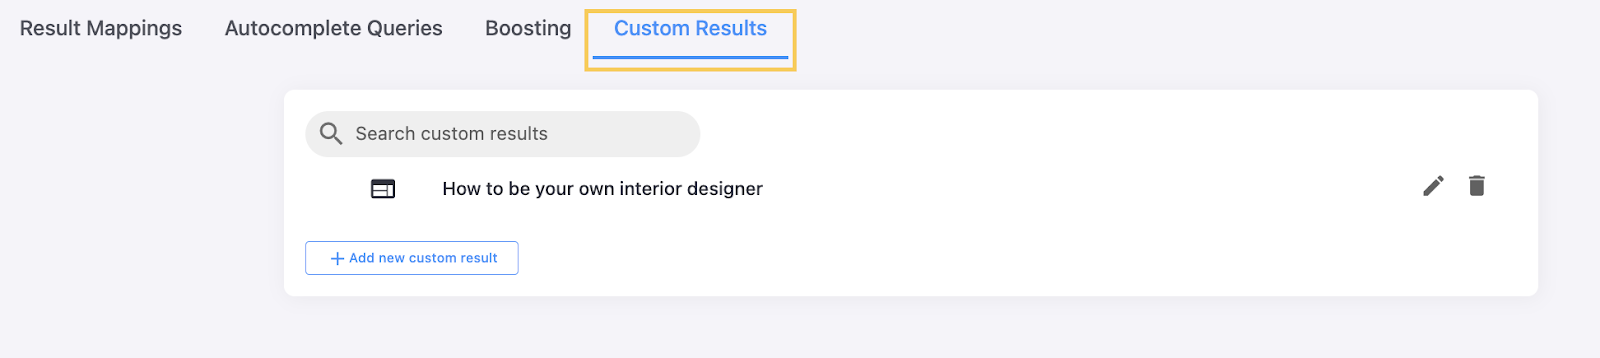 Custom Results tab